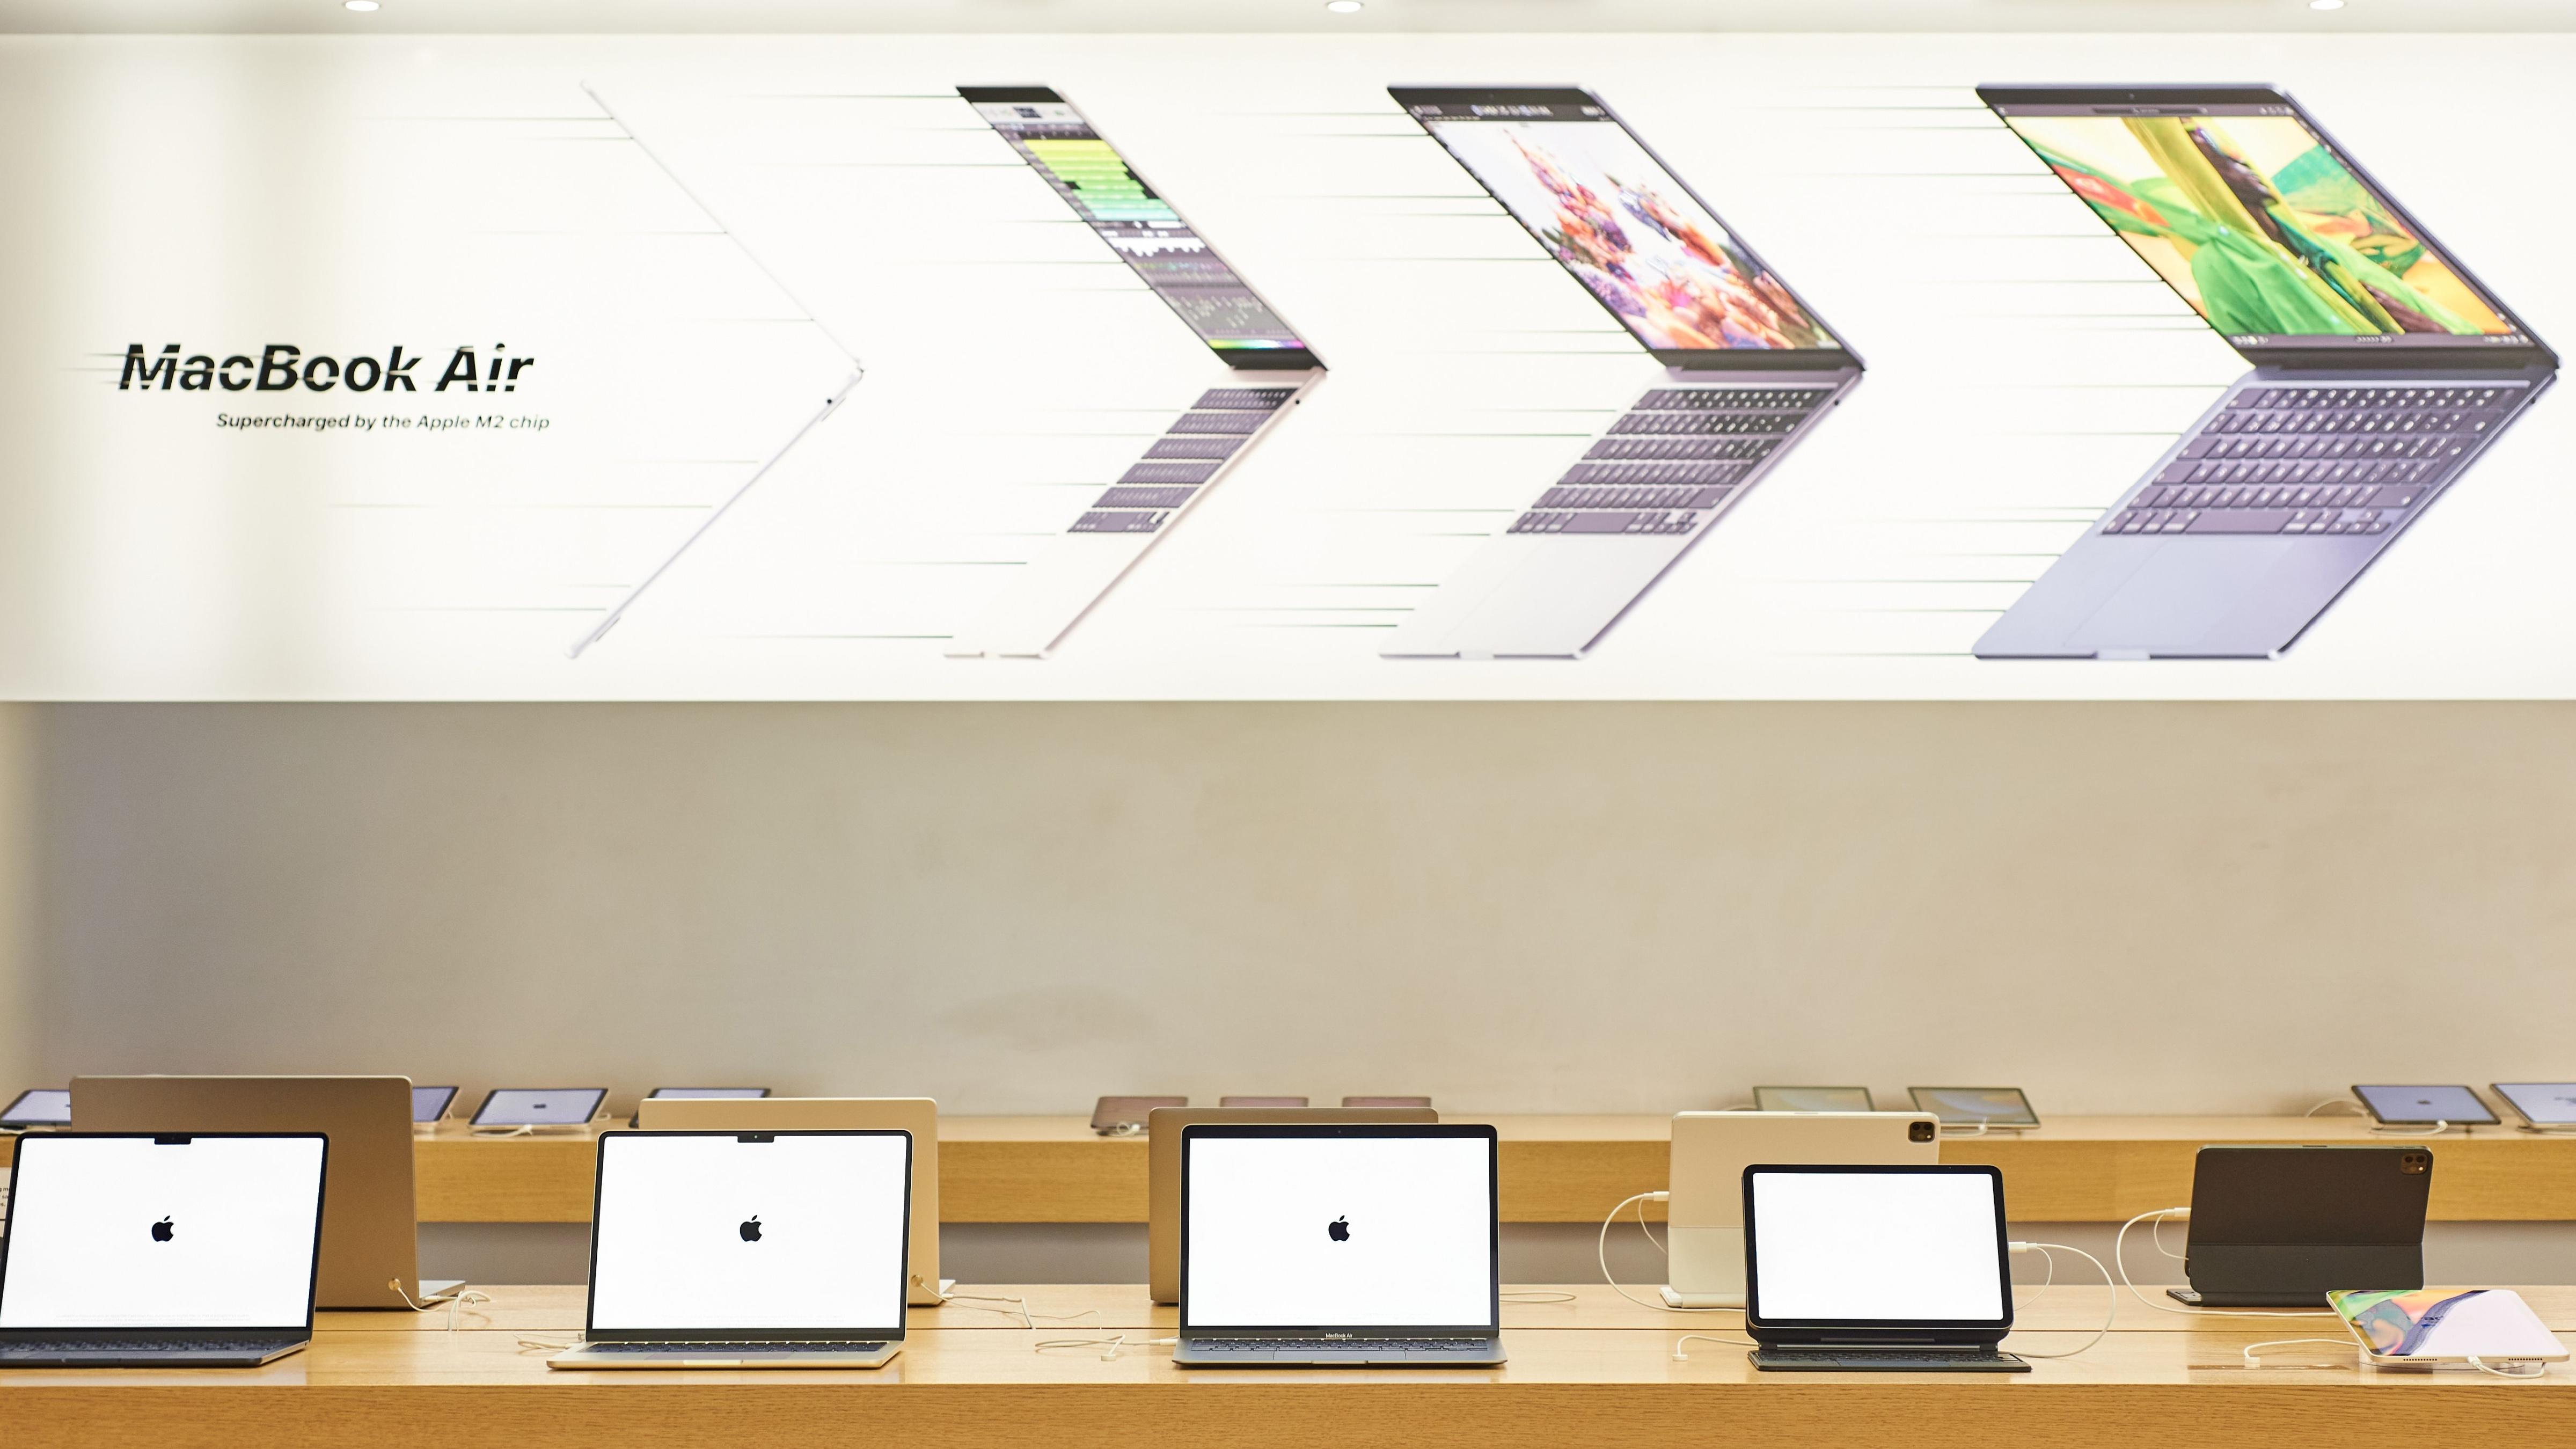 Apple Store with MacBook Display